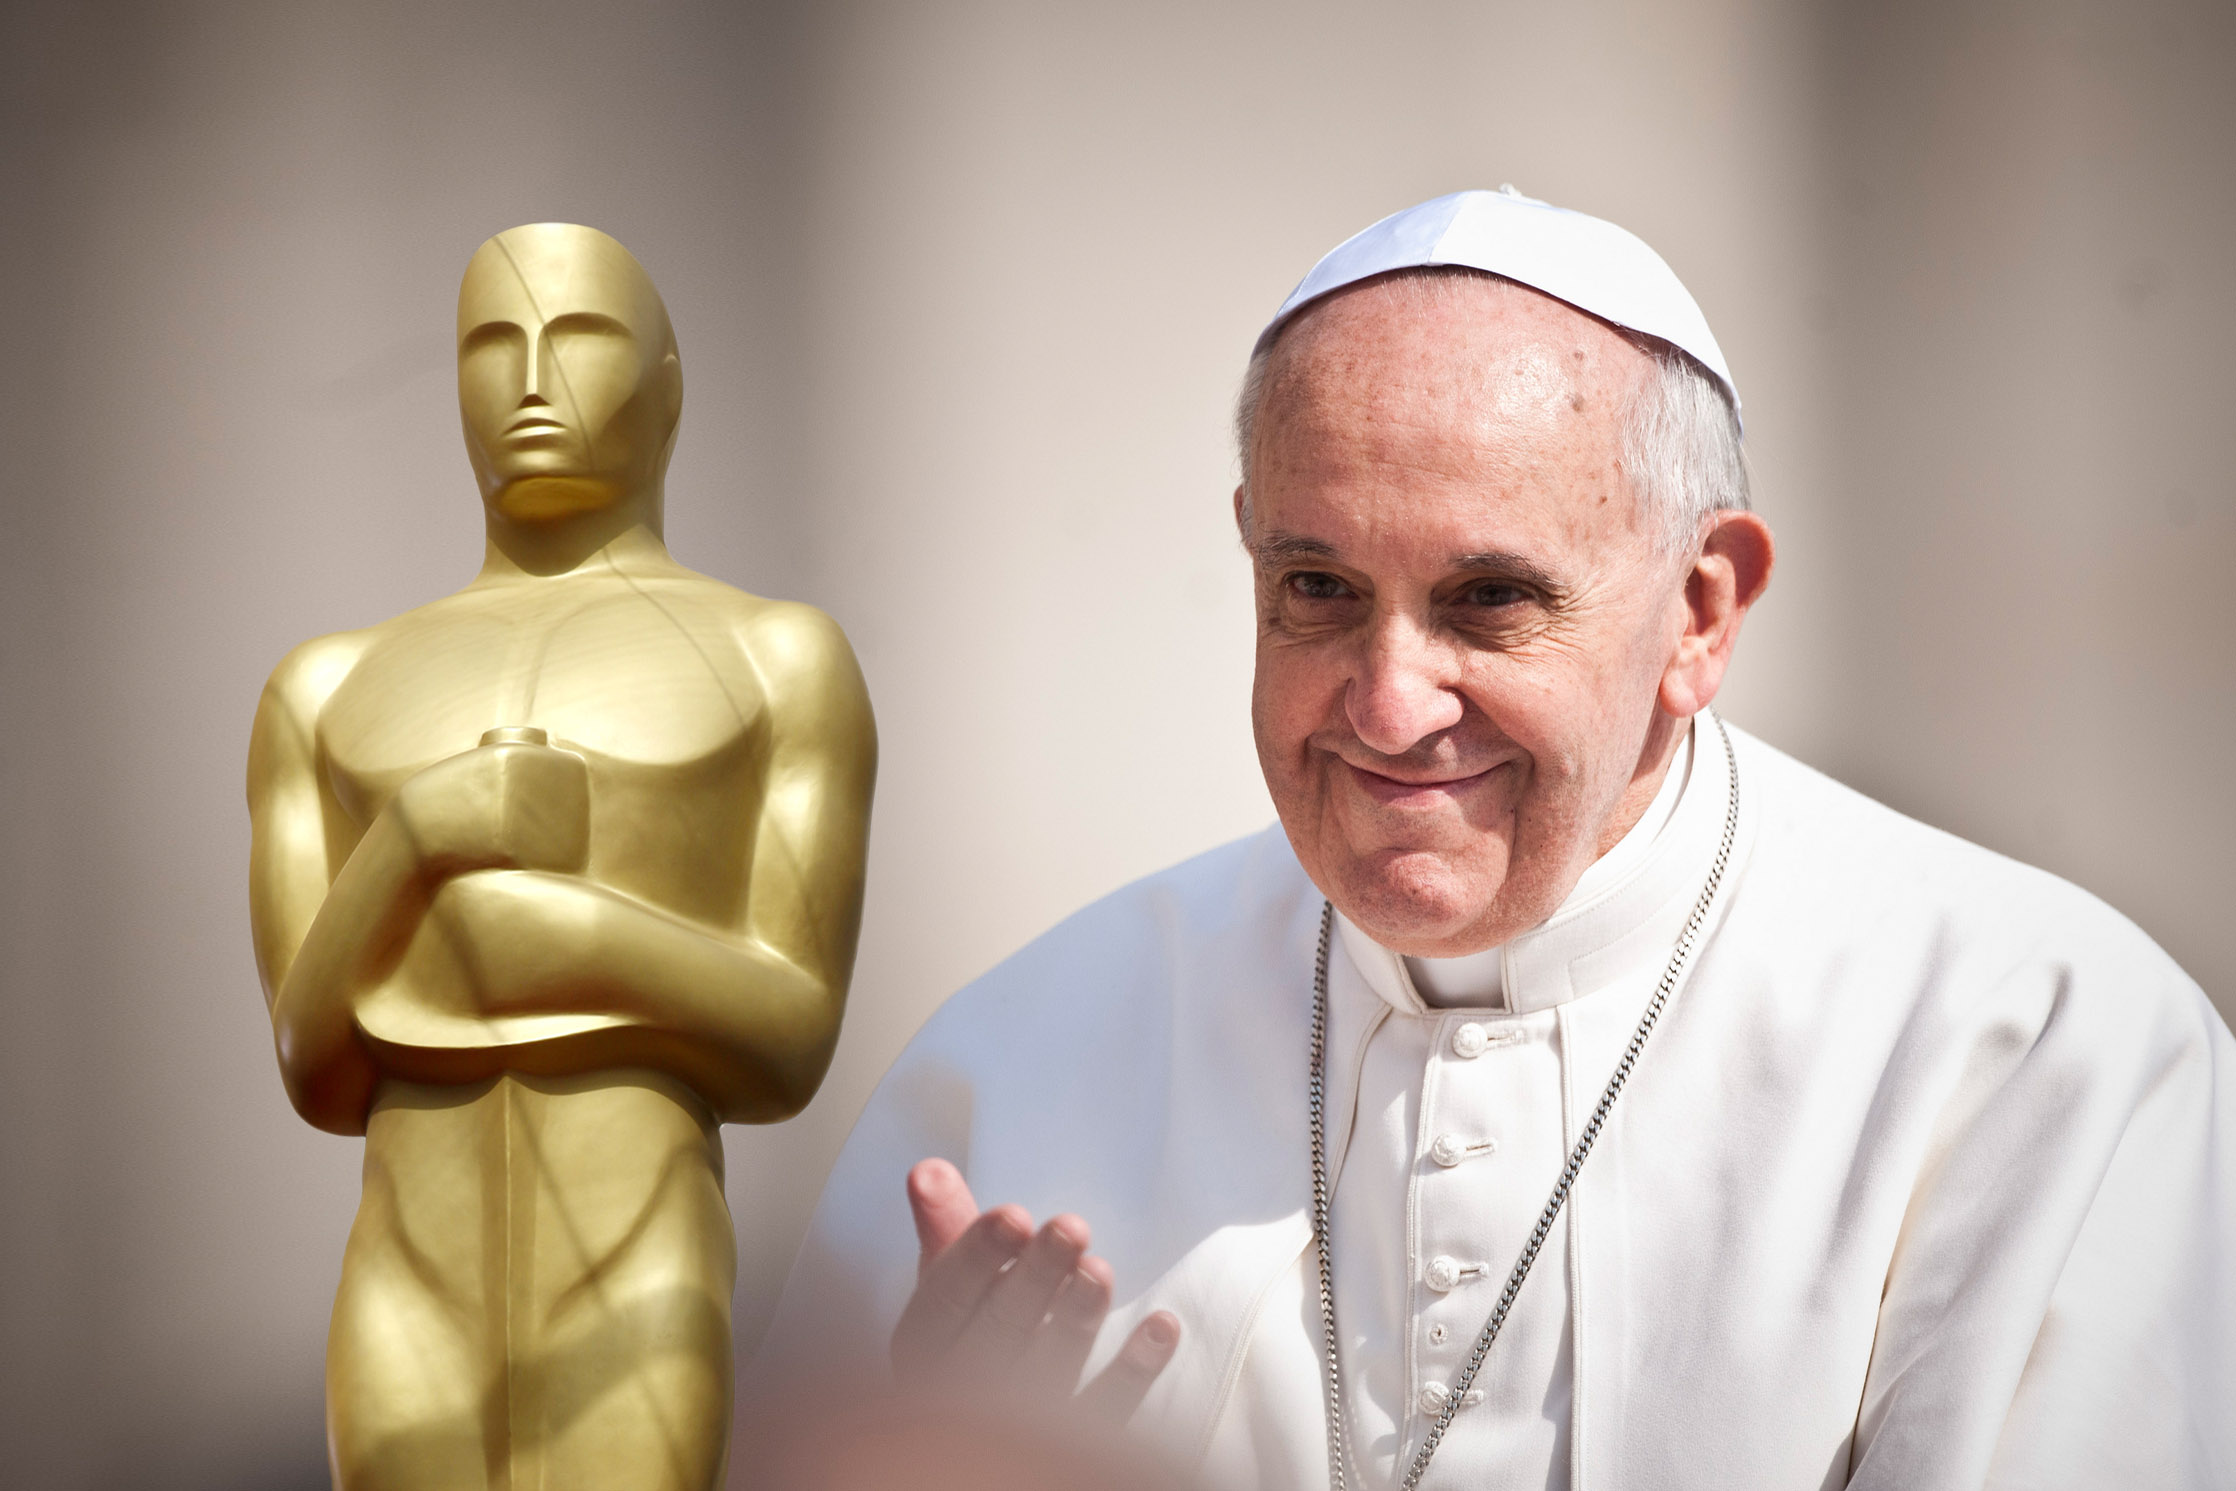 web-pope-francis-oscar-ceremony-statue-c2a9-tinseltown-shutterstock-com-mazur-catholicnews-org-uk.jpg